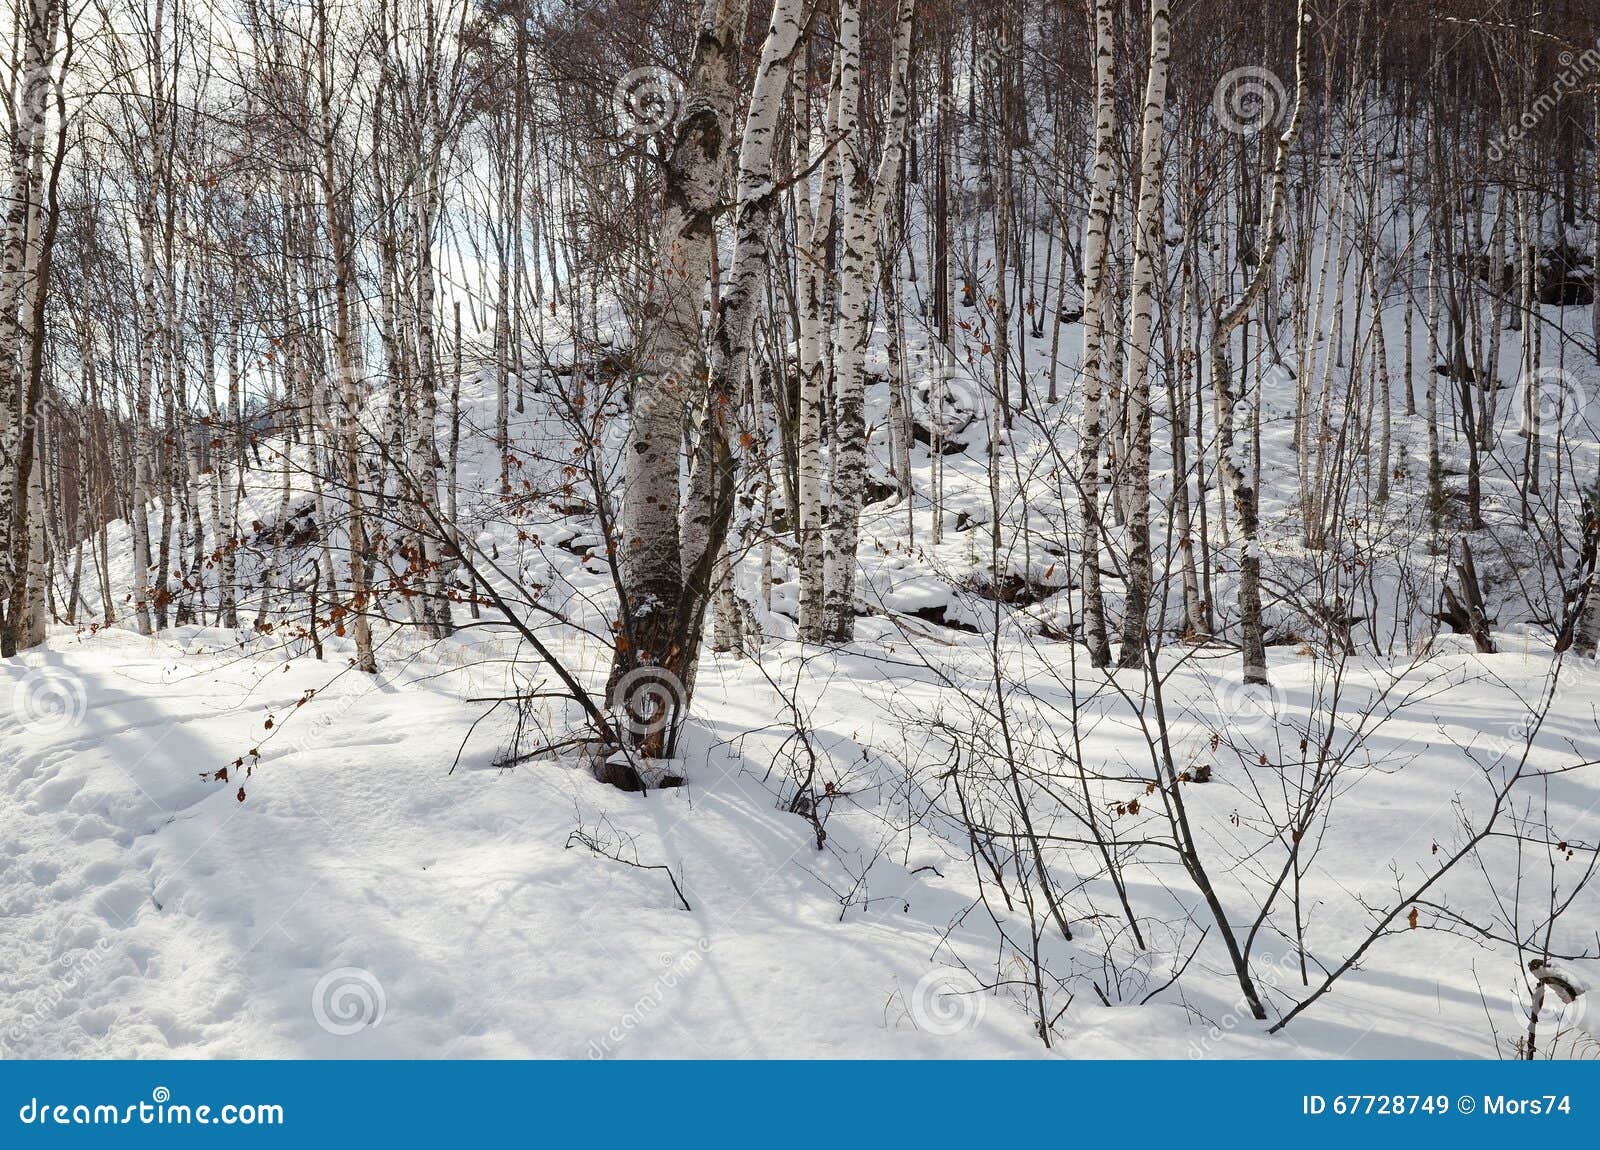 Optage Afgørelse dans Brich forest in winter stock image. Image of place, scenics - 67728749